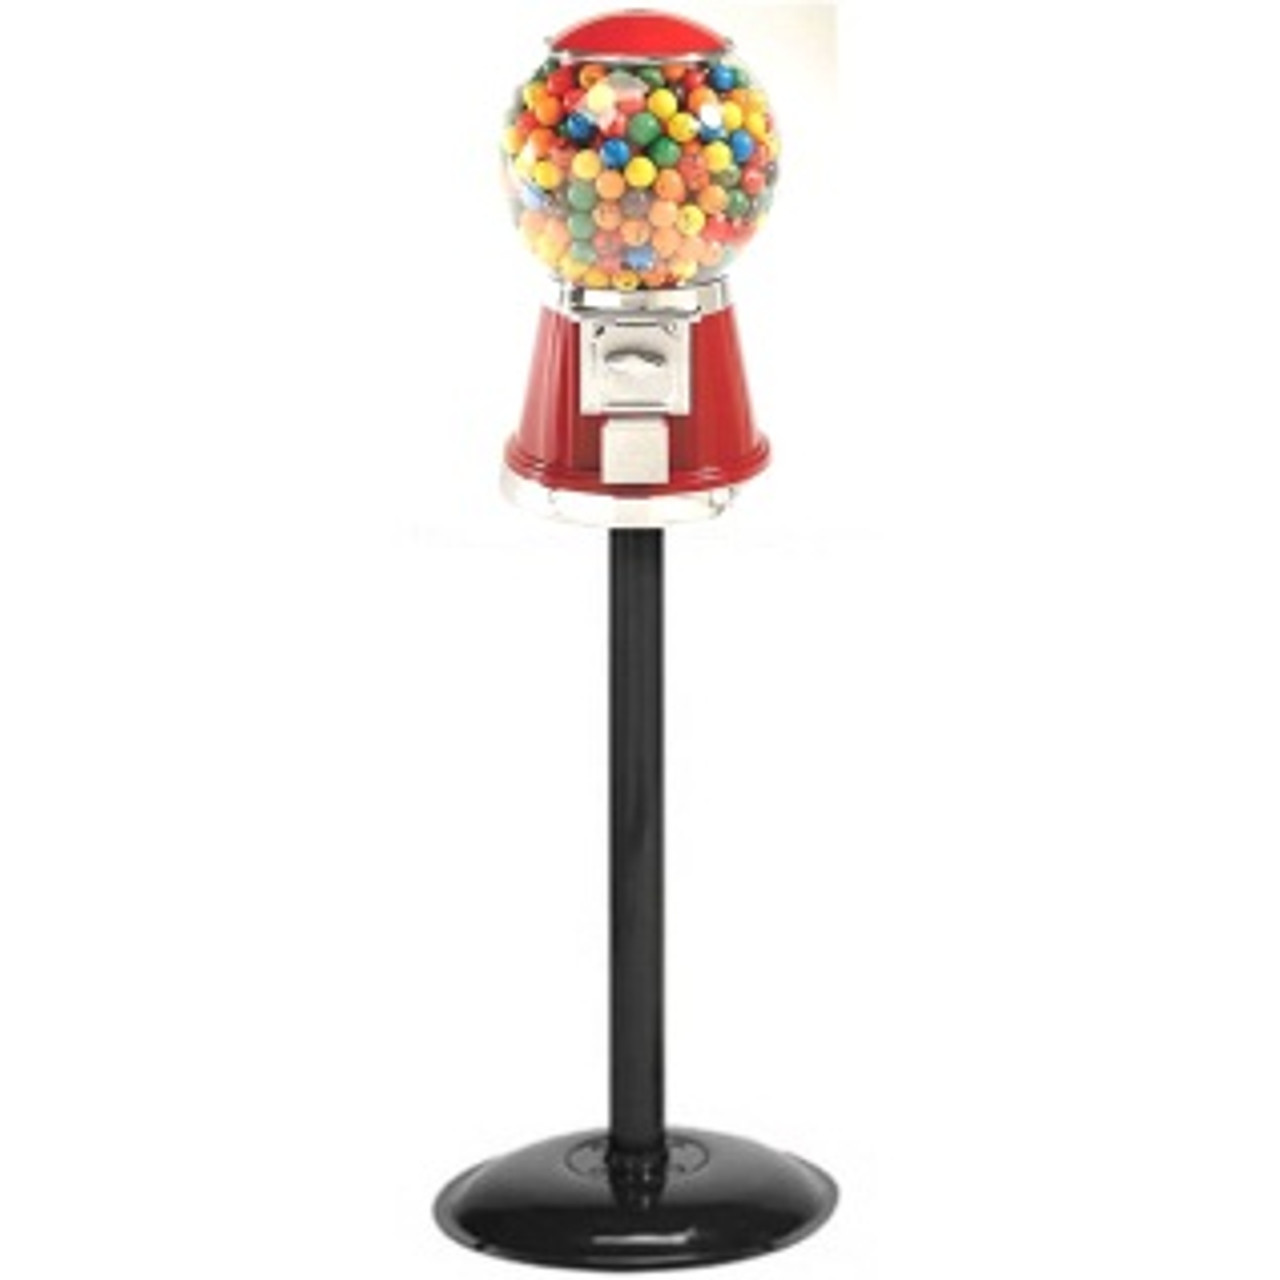 Mini Gumball Machine - Bubble Gum Candy Dispenser, Unique Money